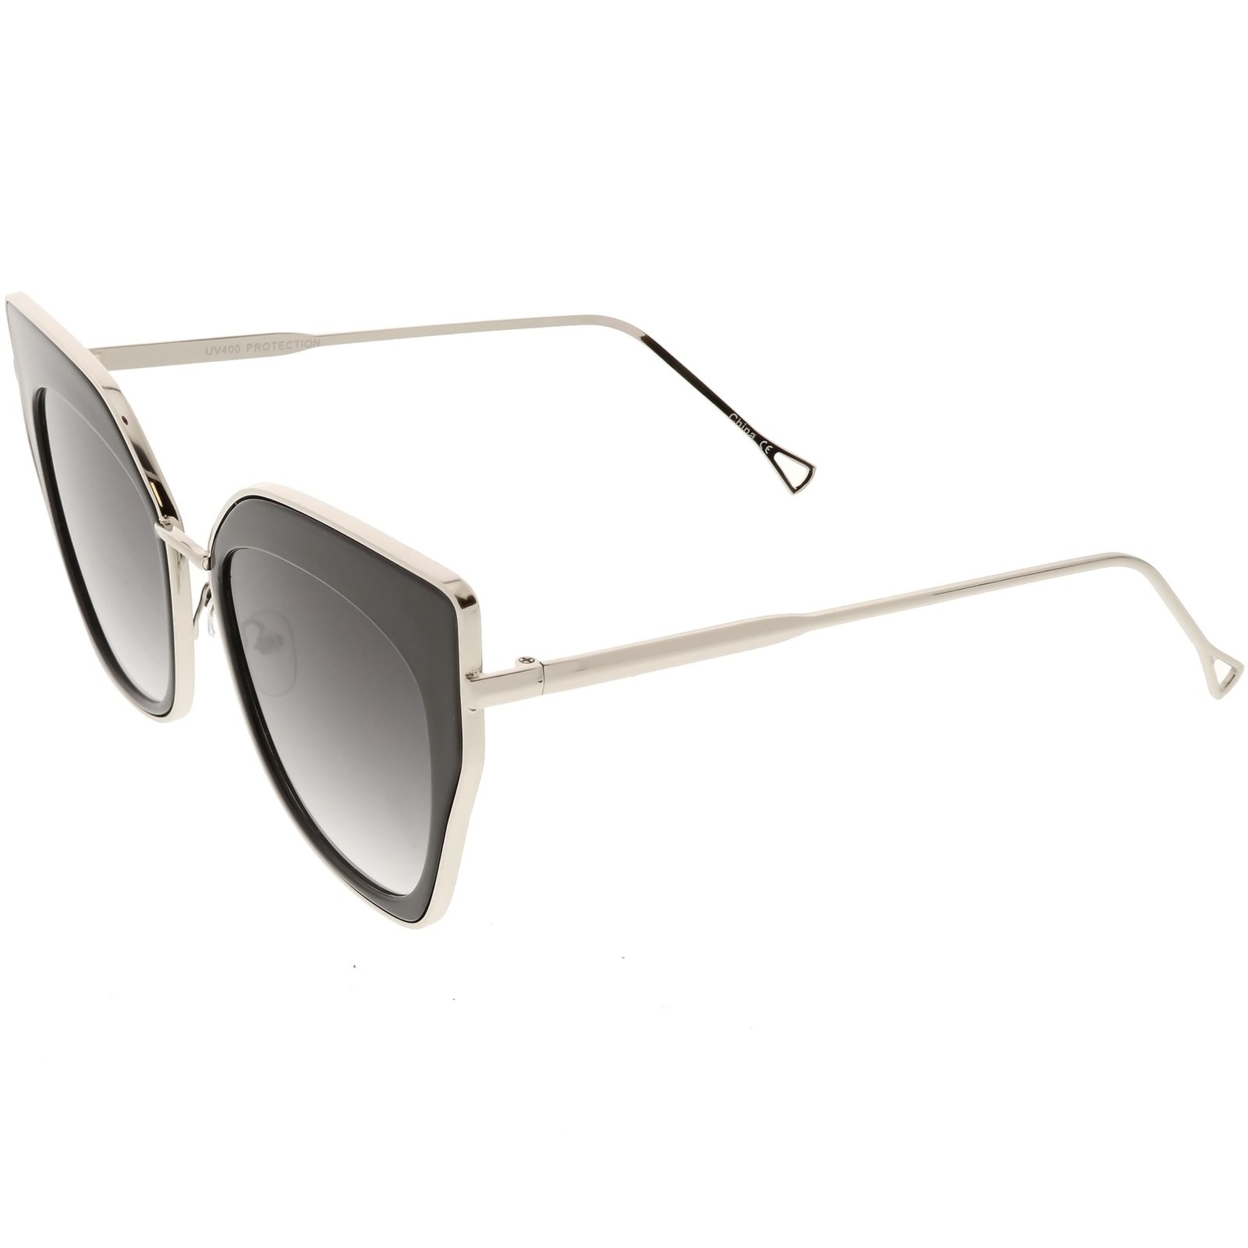 Oversize Pointed Cat Eye Sunglasses Slim Metal Nose Bridge Neutral Square Lens 58mm - Tortoise Gold / Amber